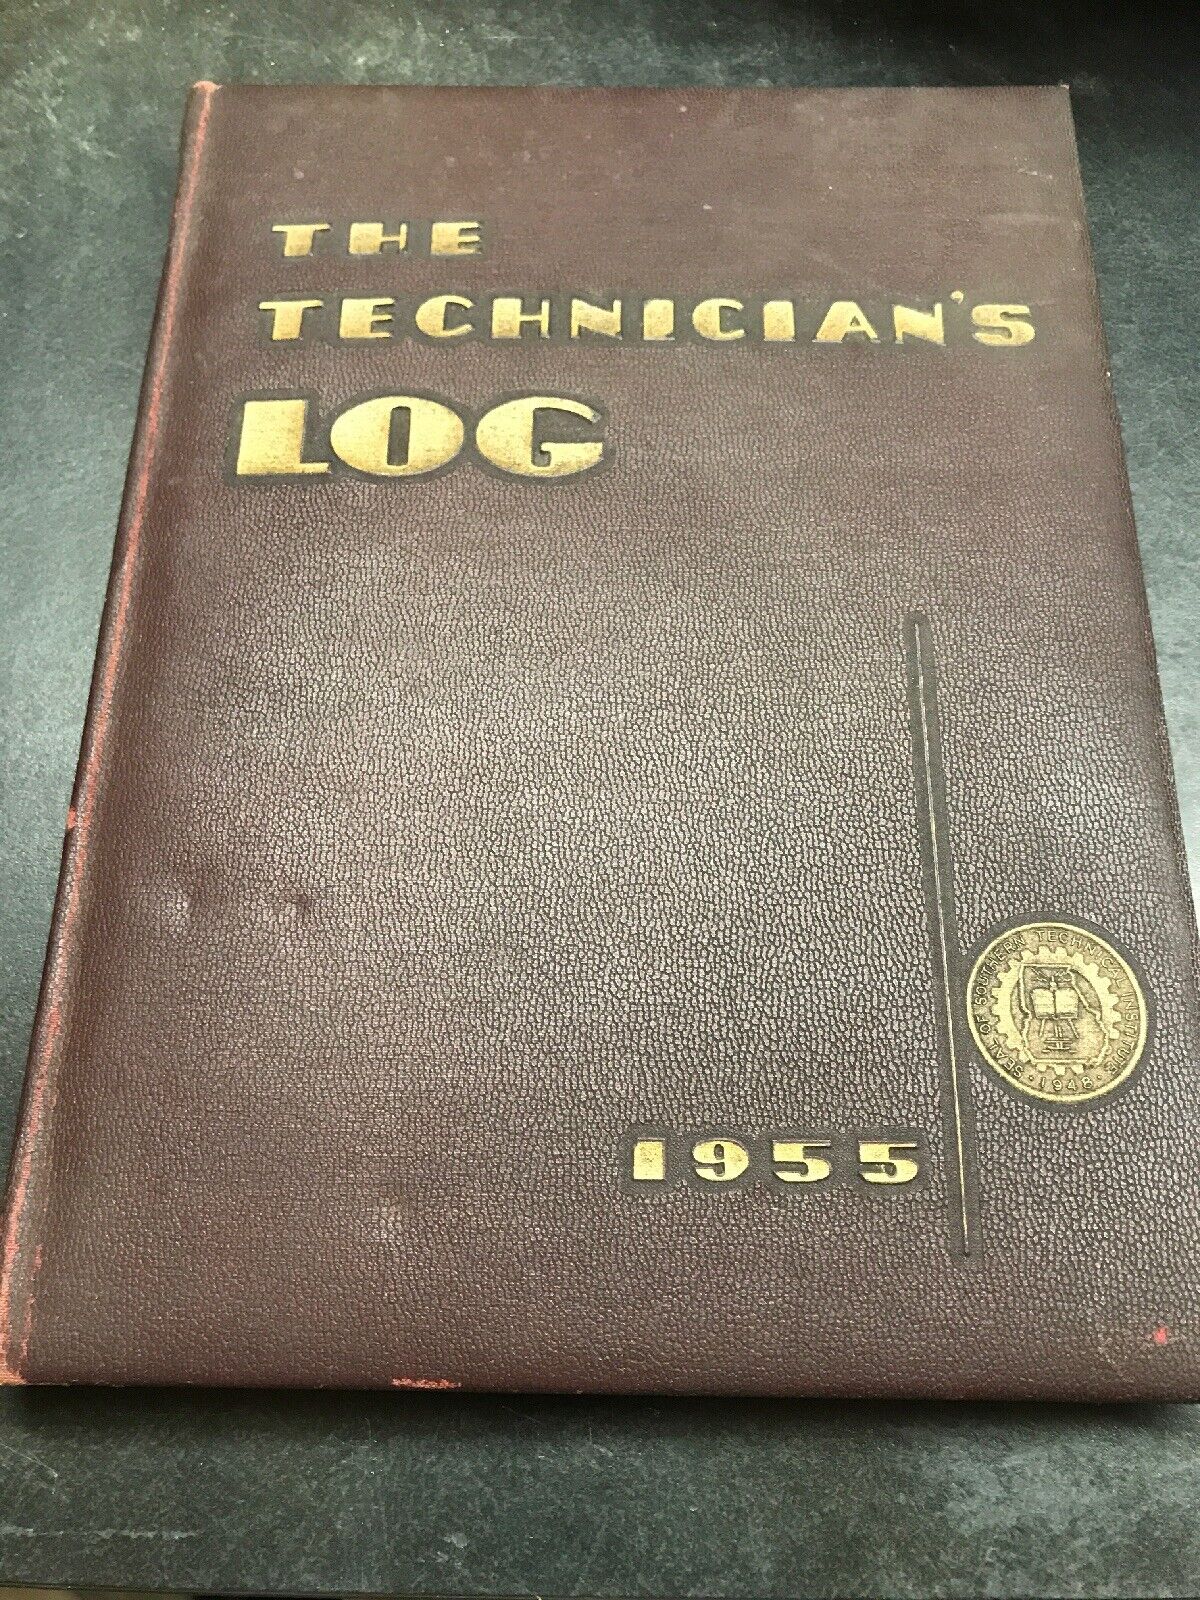 Yearbook: The Technician’s Log 1955-Southern Technical Institute, Marietta, GA